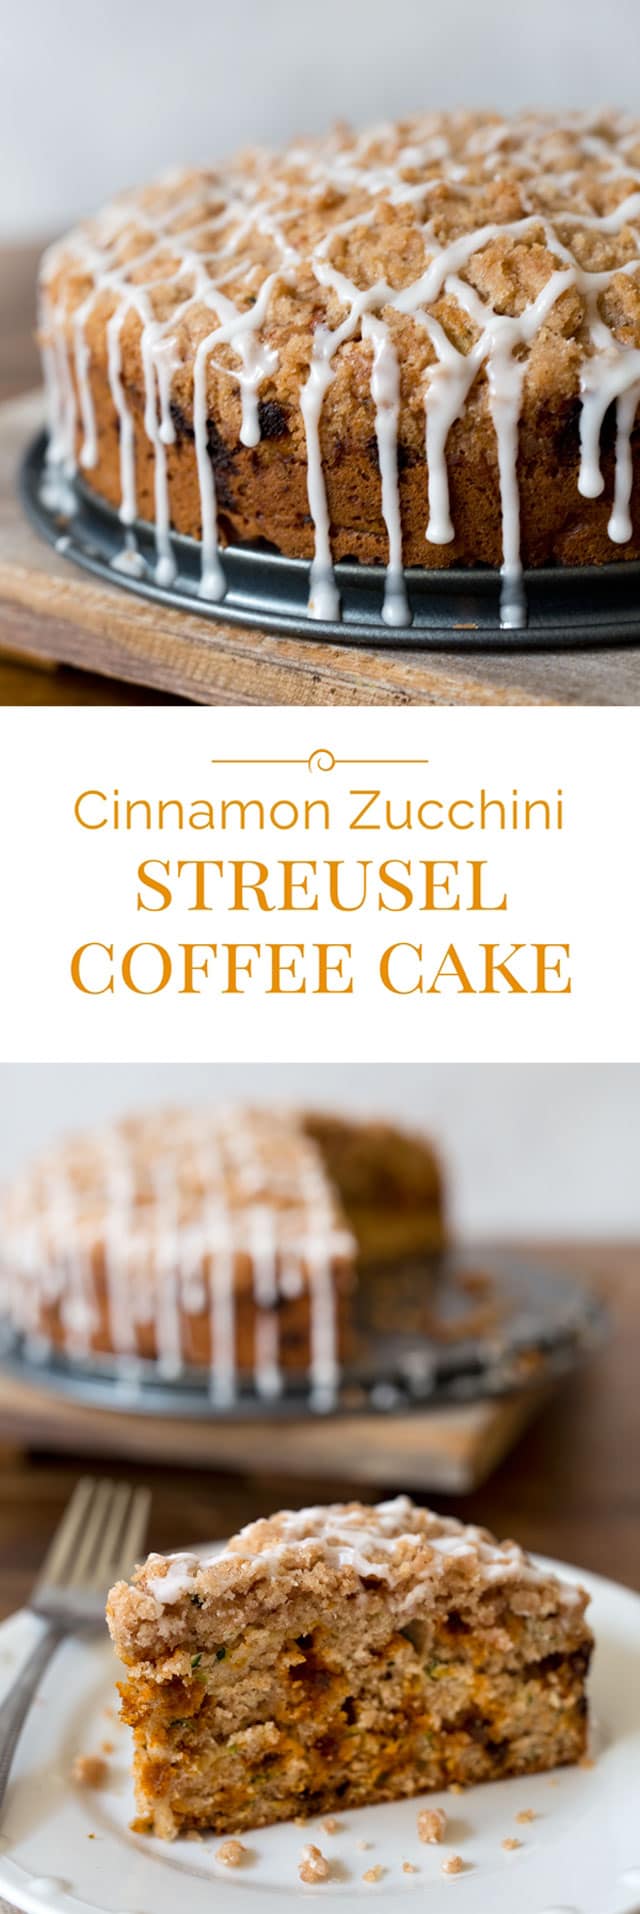 Cinnamon-Zucchini-Streusel-Coffee-Cake-Collage-Barbara-Bakes